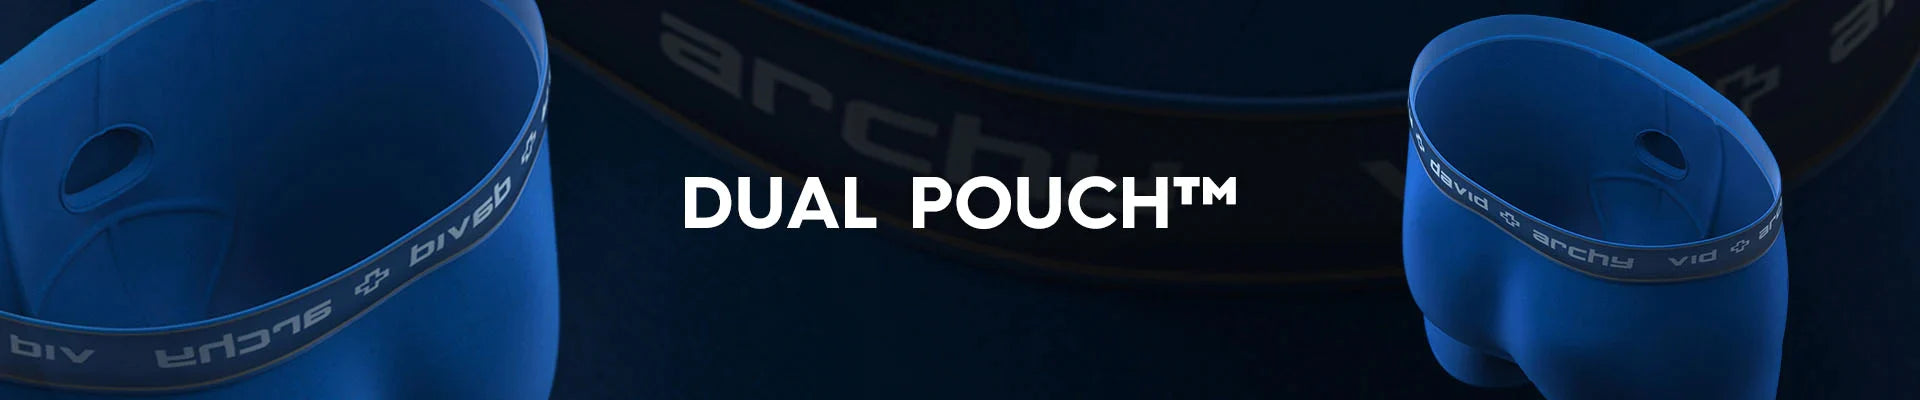 Dual Pouch – David Archy